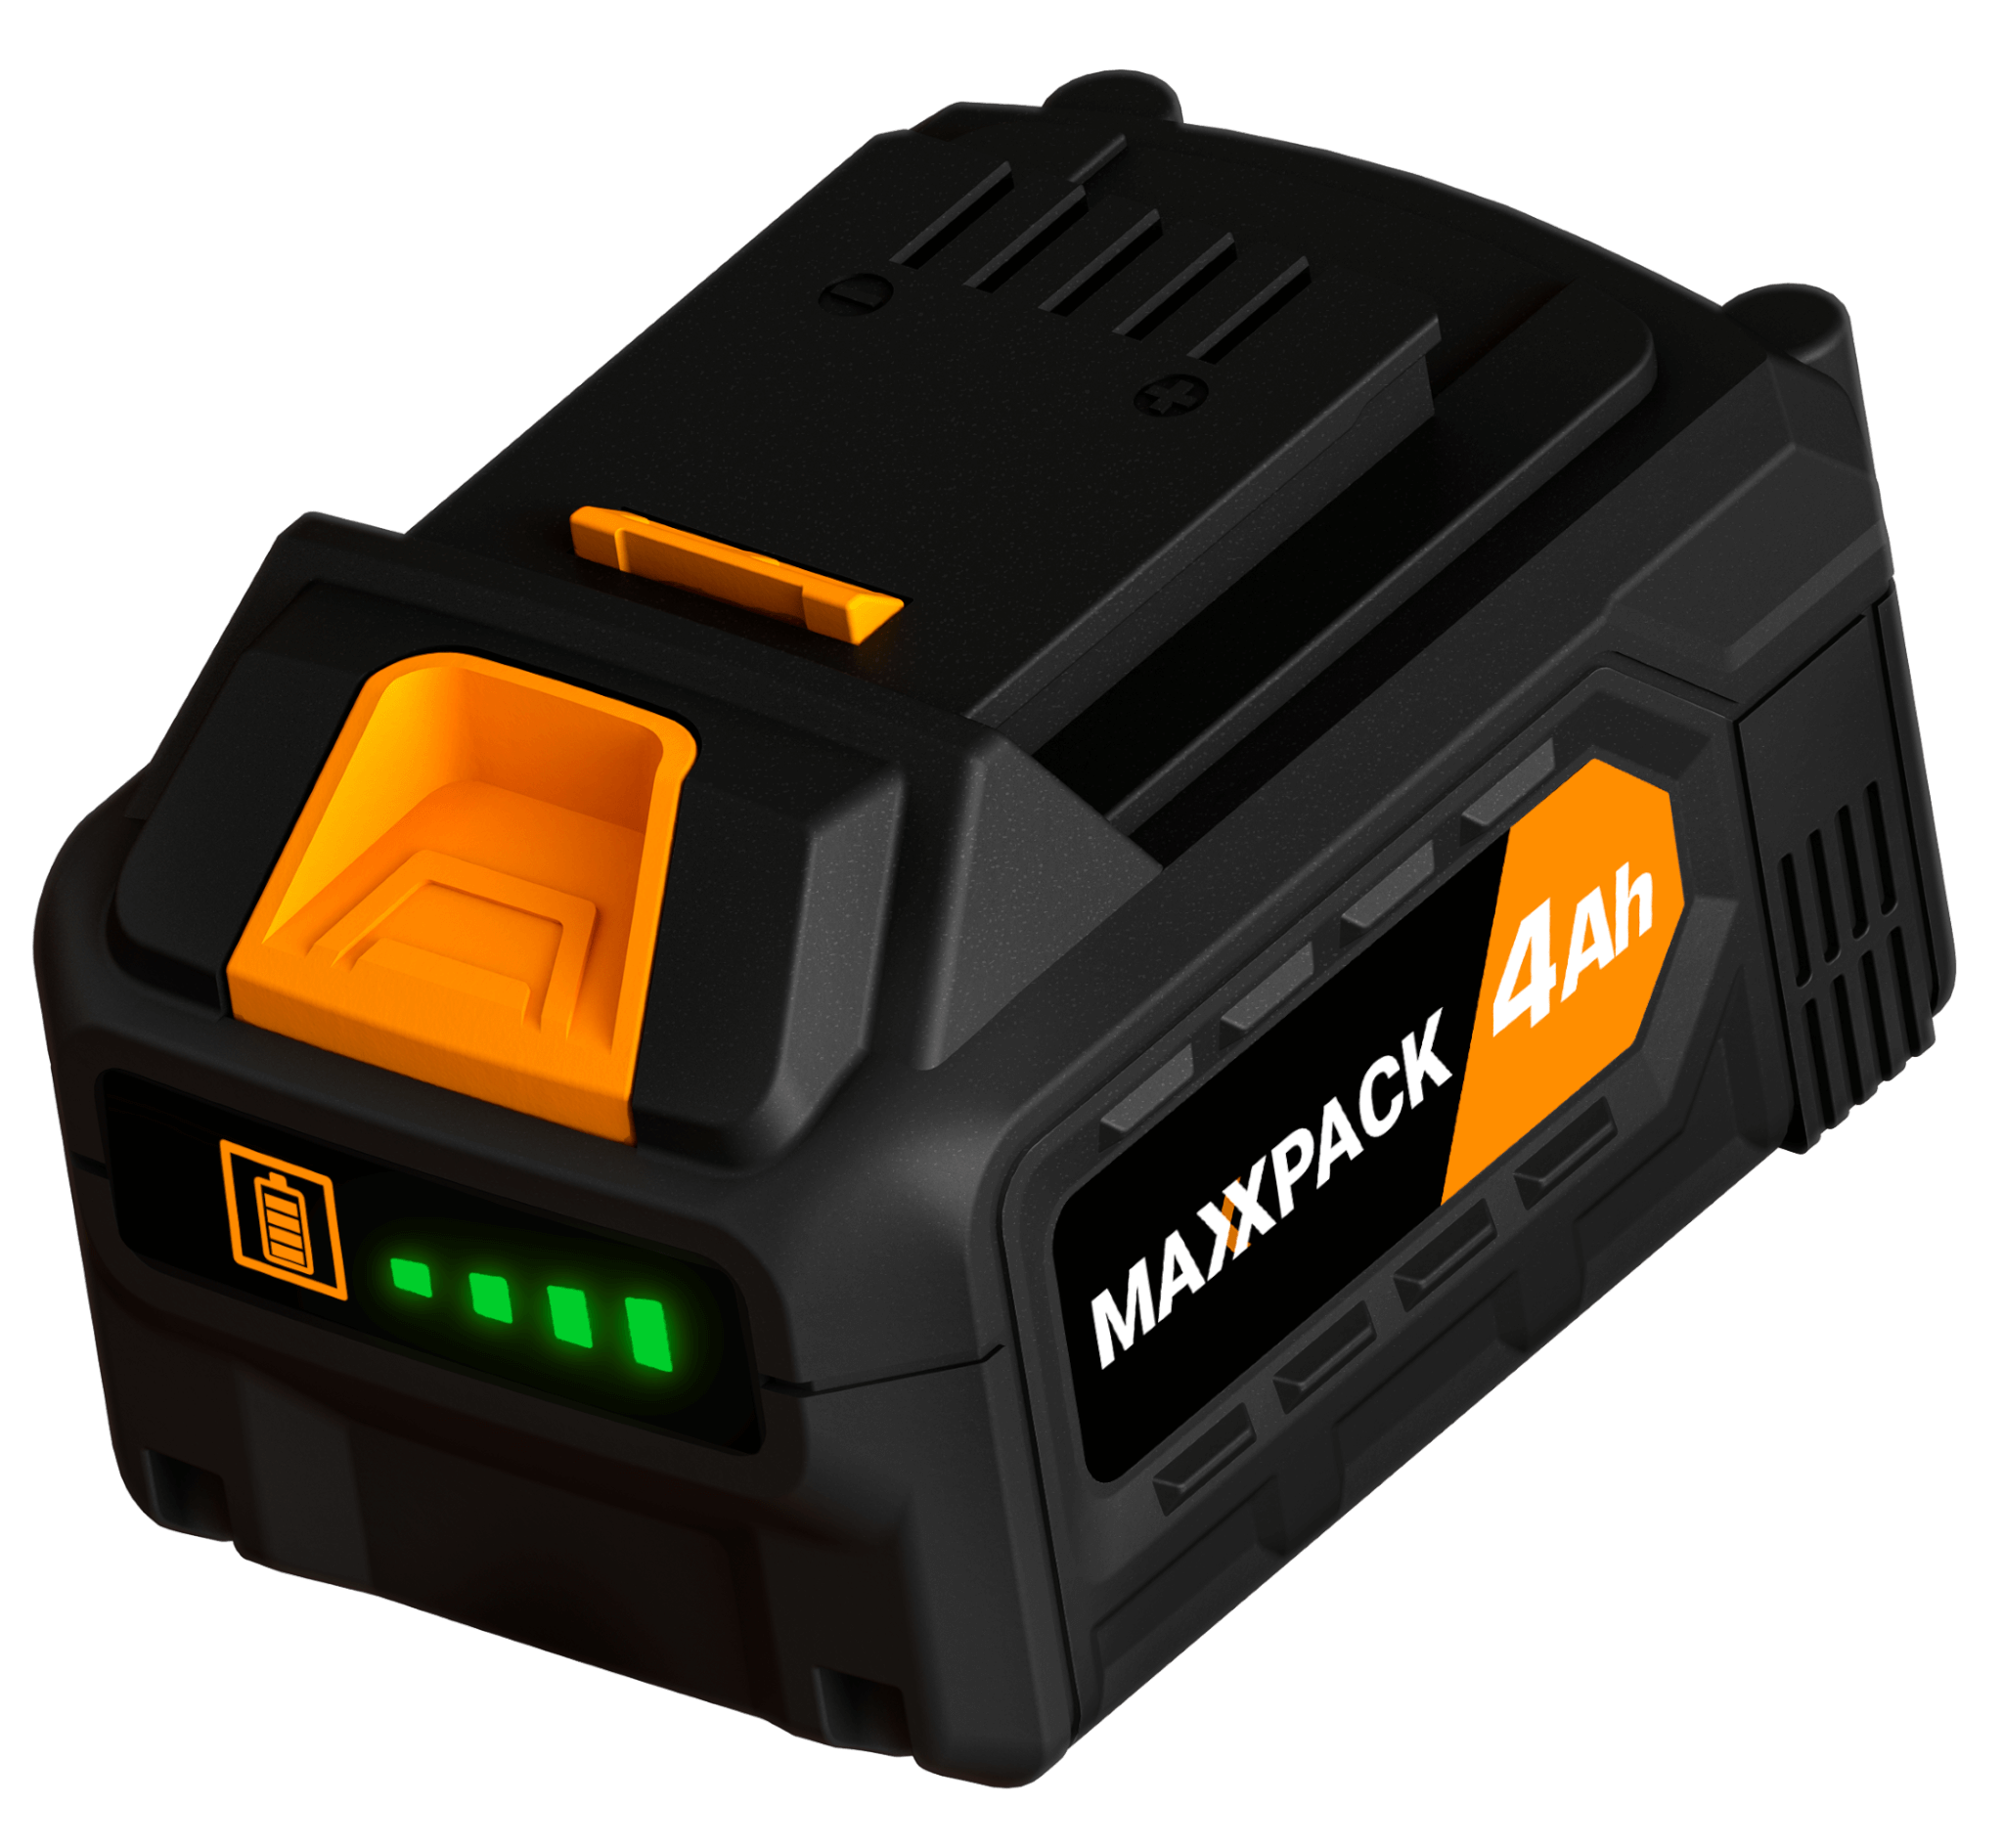 4.0Ah battery powertools | Batavia | Maxxpack collection